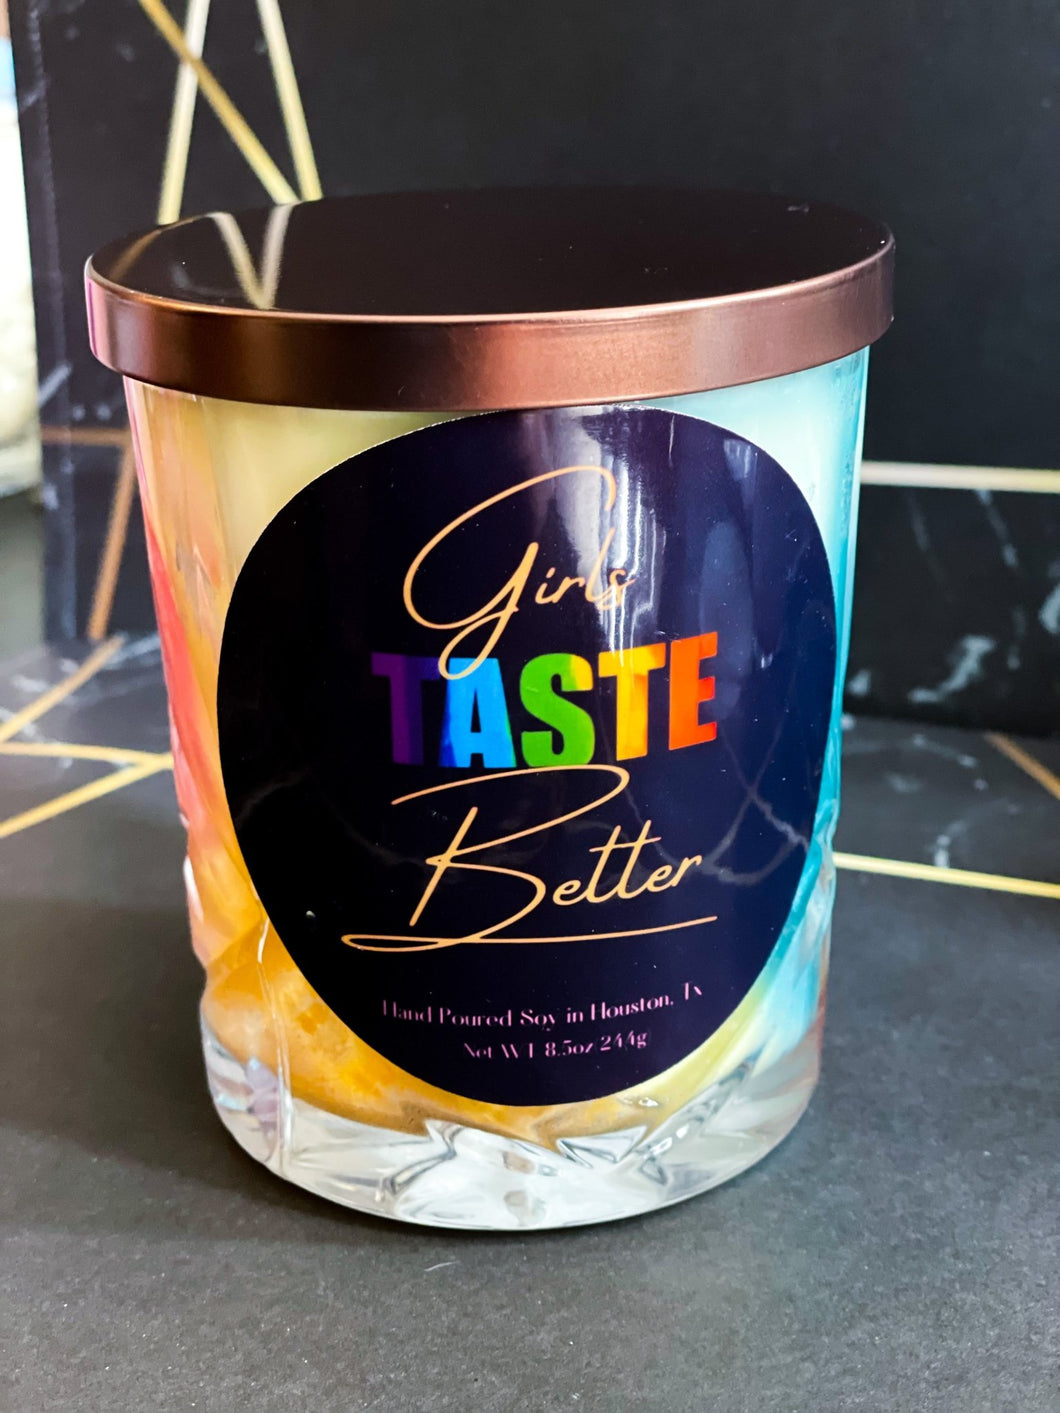 Girls Taste Better - Orgasmic Healing LLC